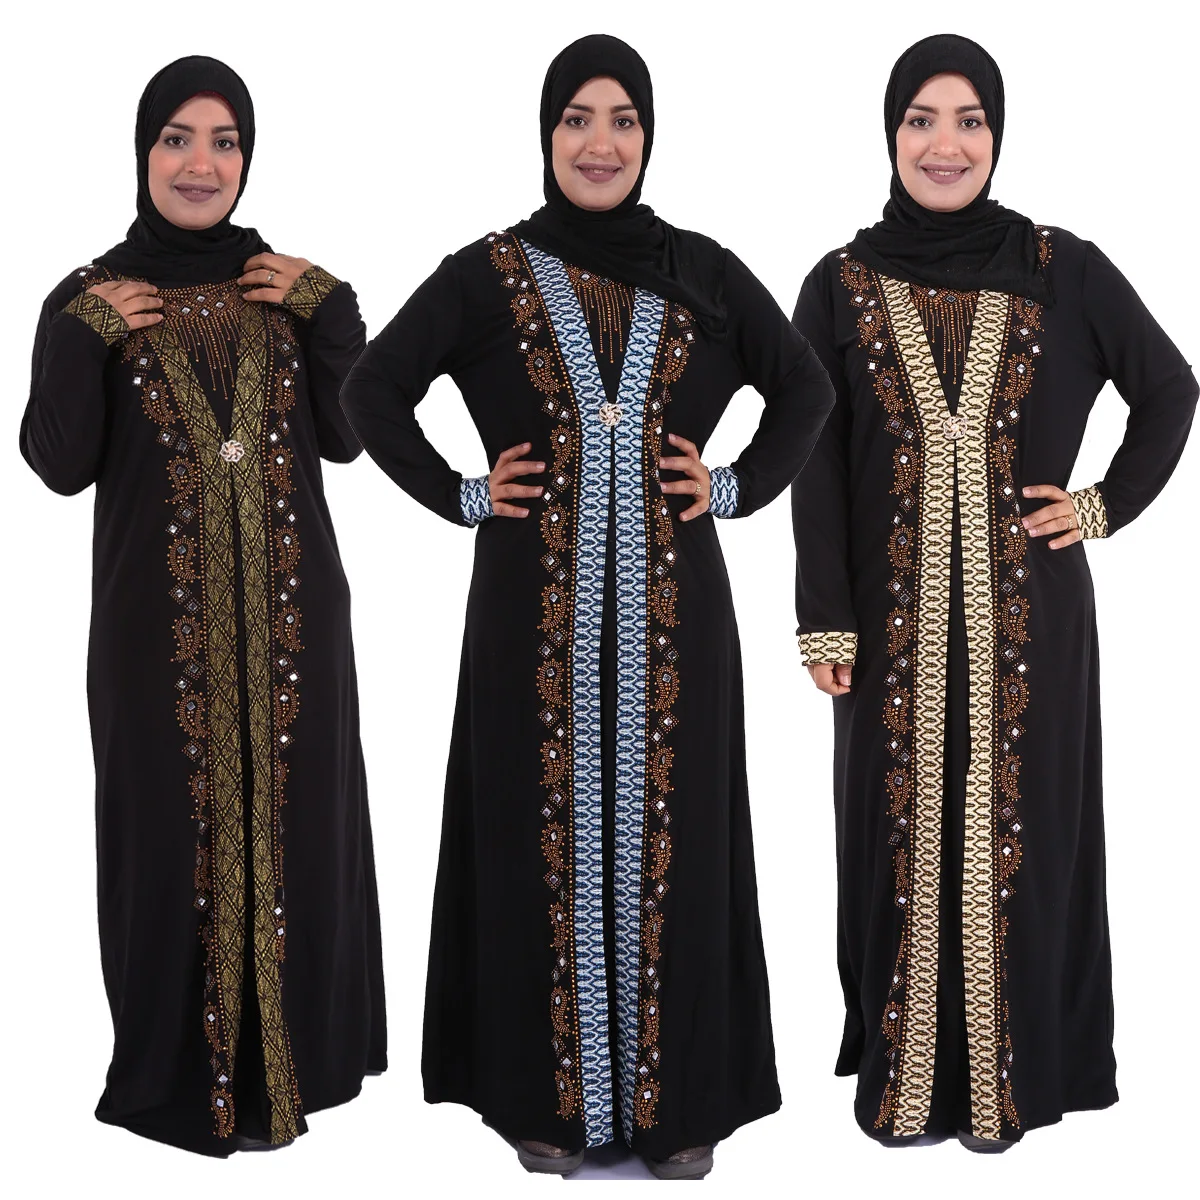 

High Quality Women Islamic Prayer Lady Black Robe Arabic Robe Hijab Rhinestone Printed Dress Muslim, Picture show